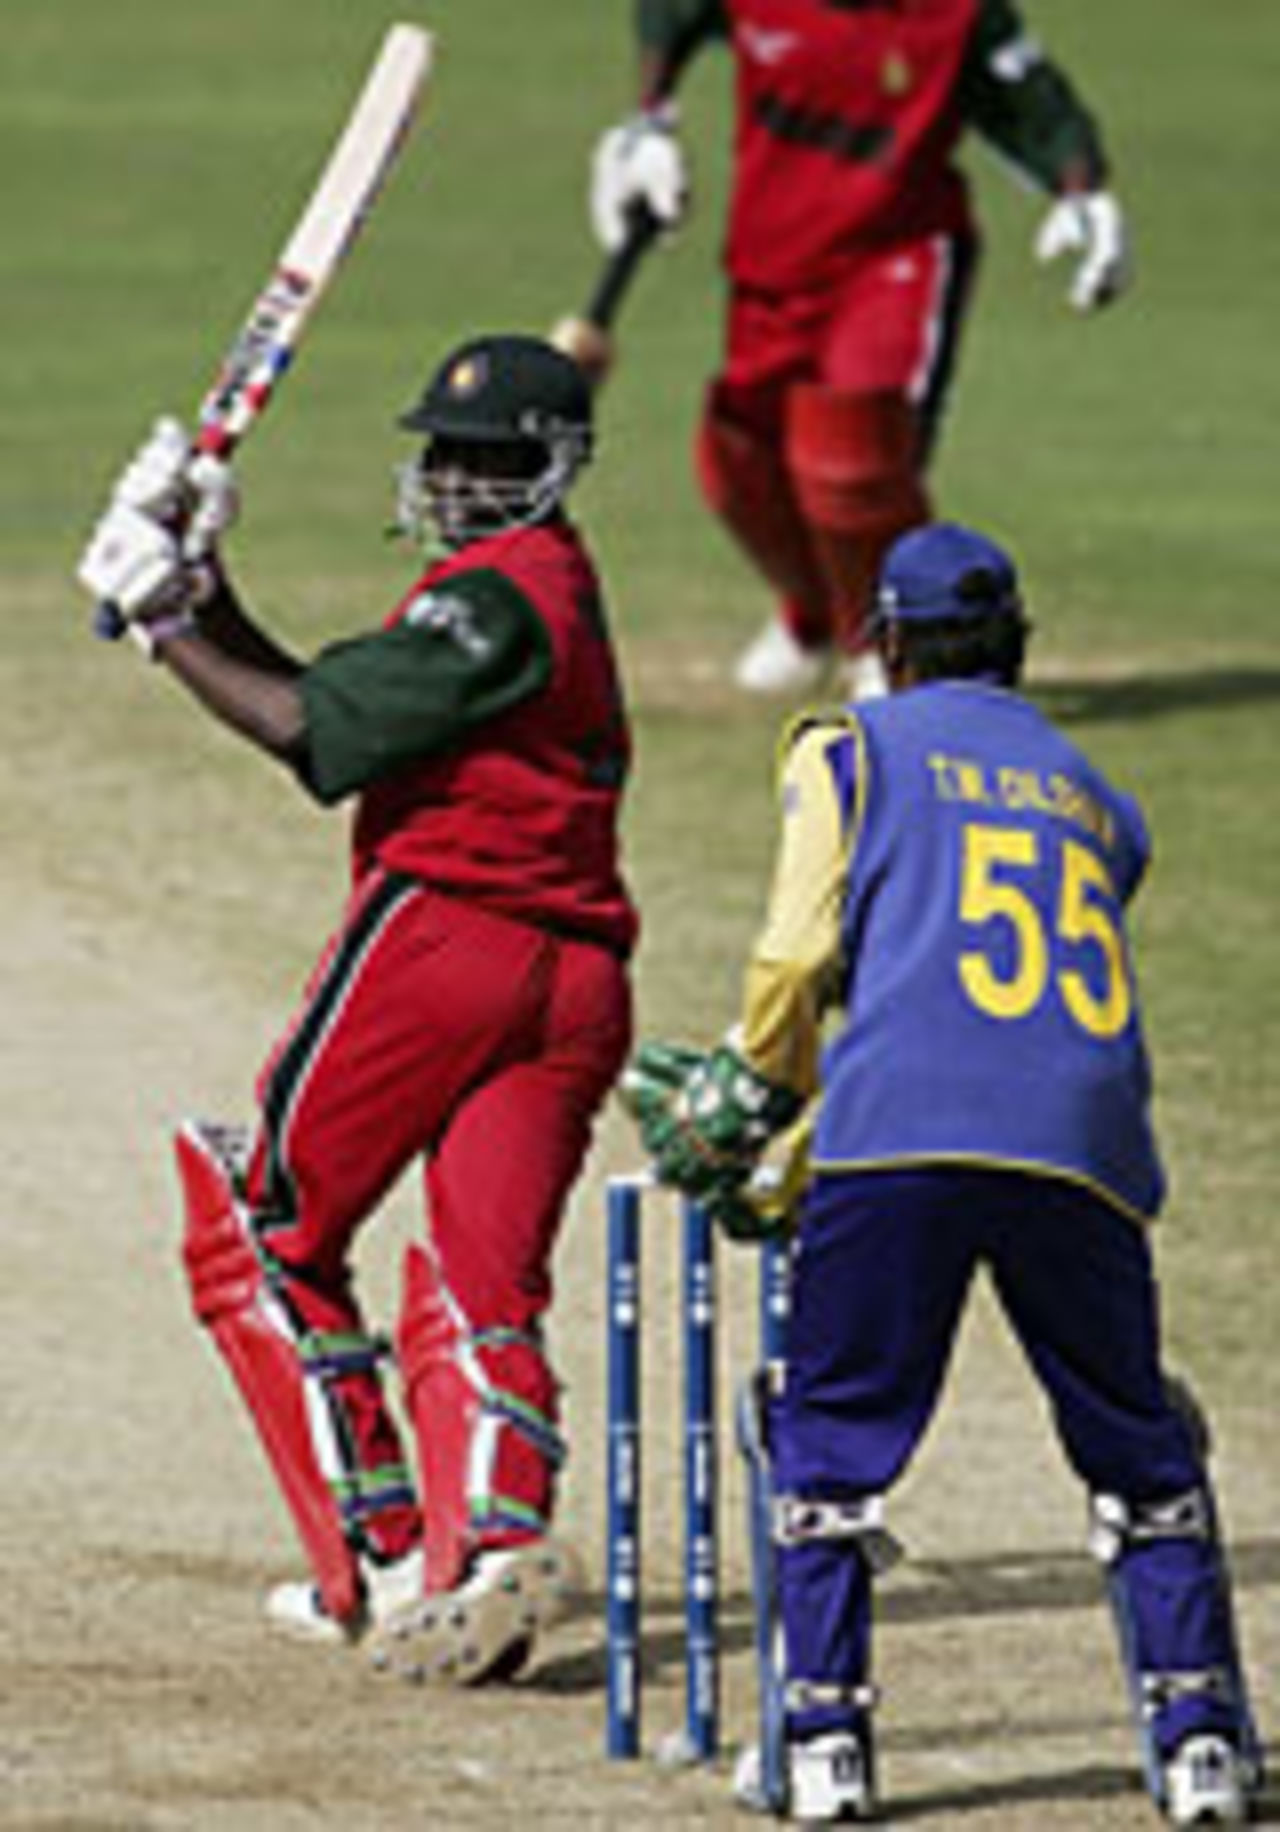 Elton Chigumbura on his way to 57, Sri Lanka v Zimbabwe, Champions Trophy, The Oval, September 14, 2004